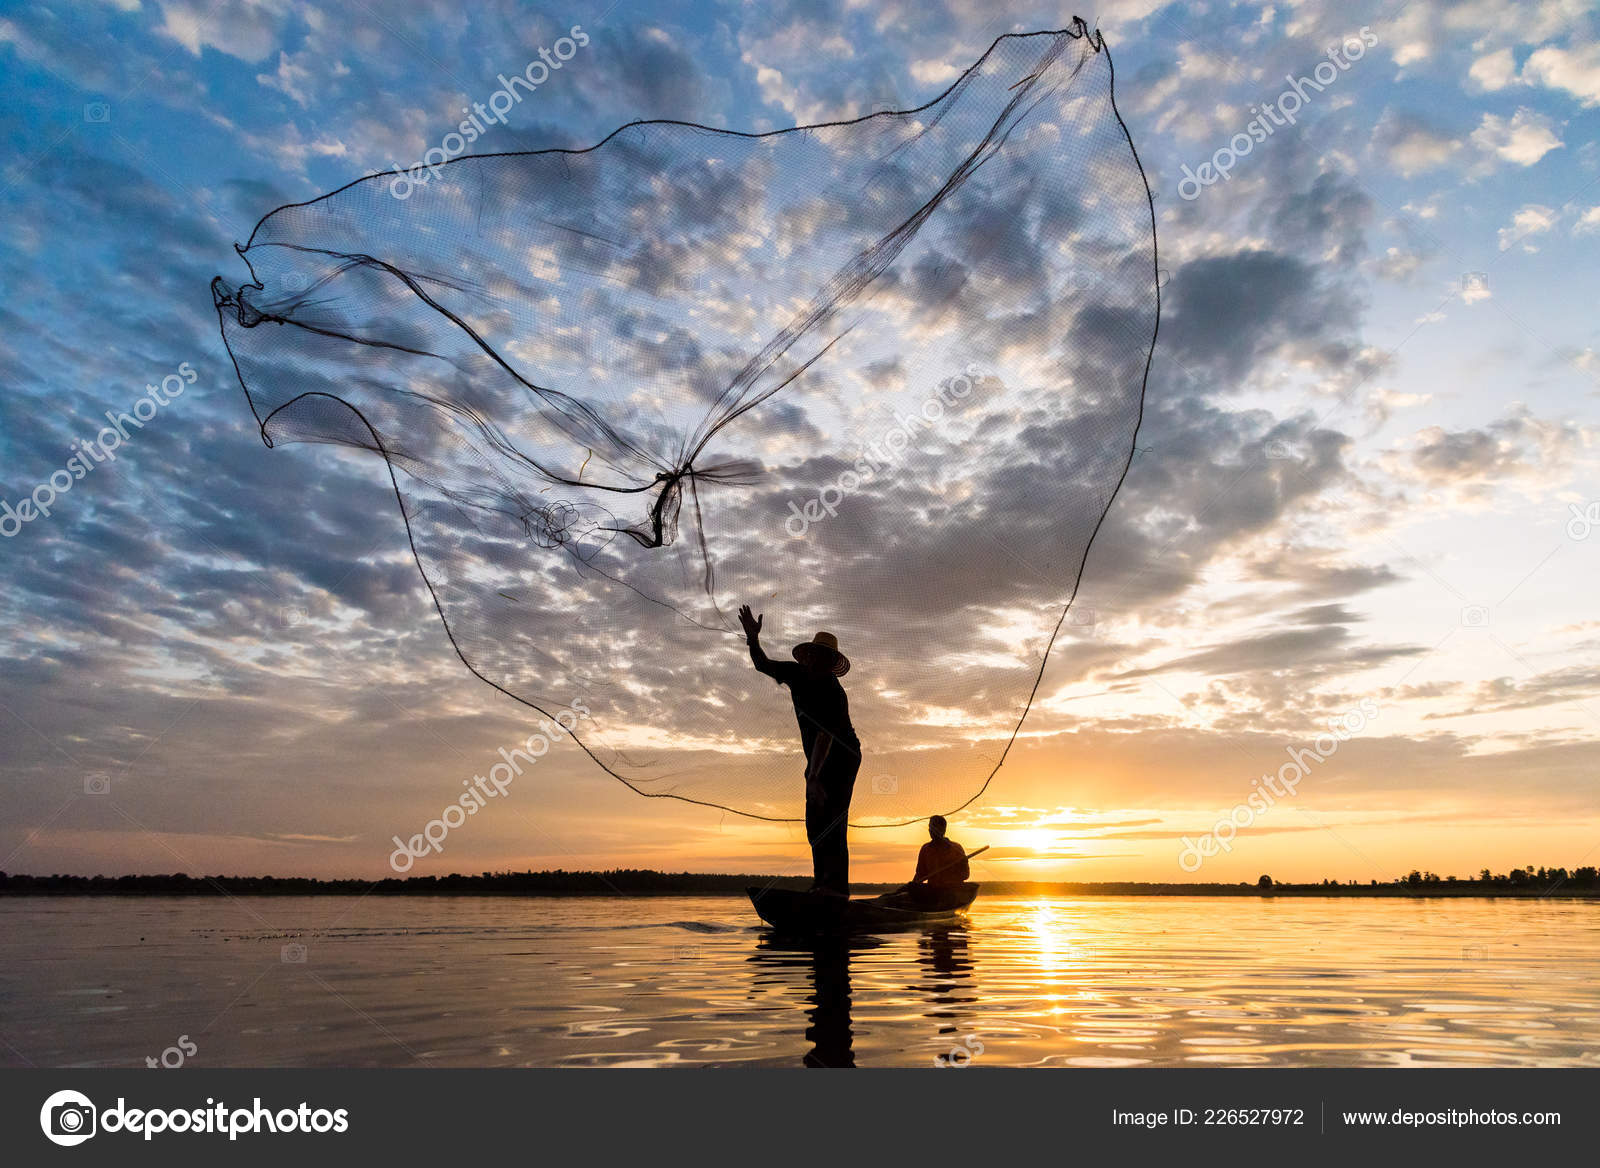 https://st4.depositphotos.com/15647408/22652/i/1600/depositphotos_226527972-stock-photo-silhouette-fishermen-throwing-net-fishing.jpg